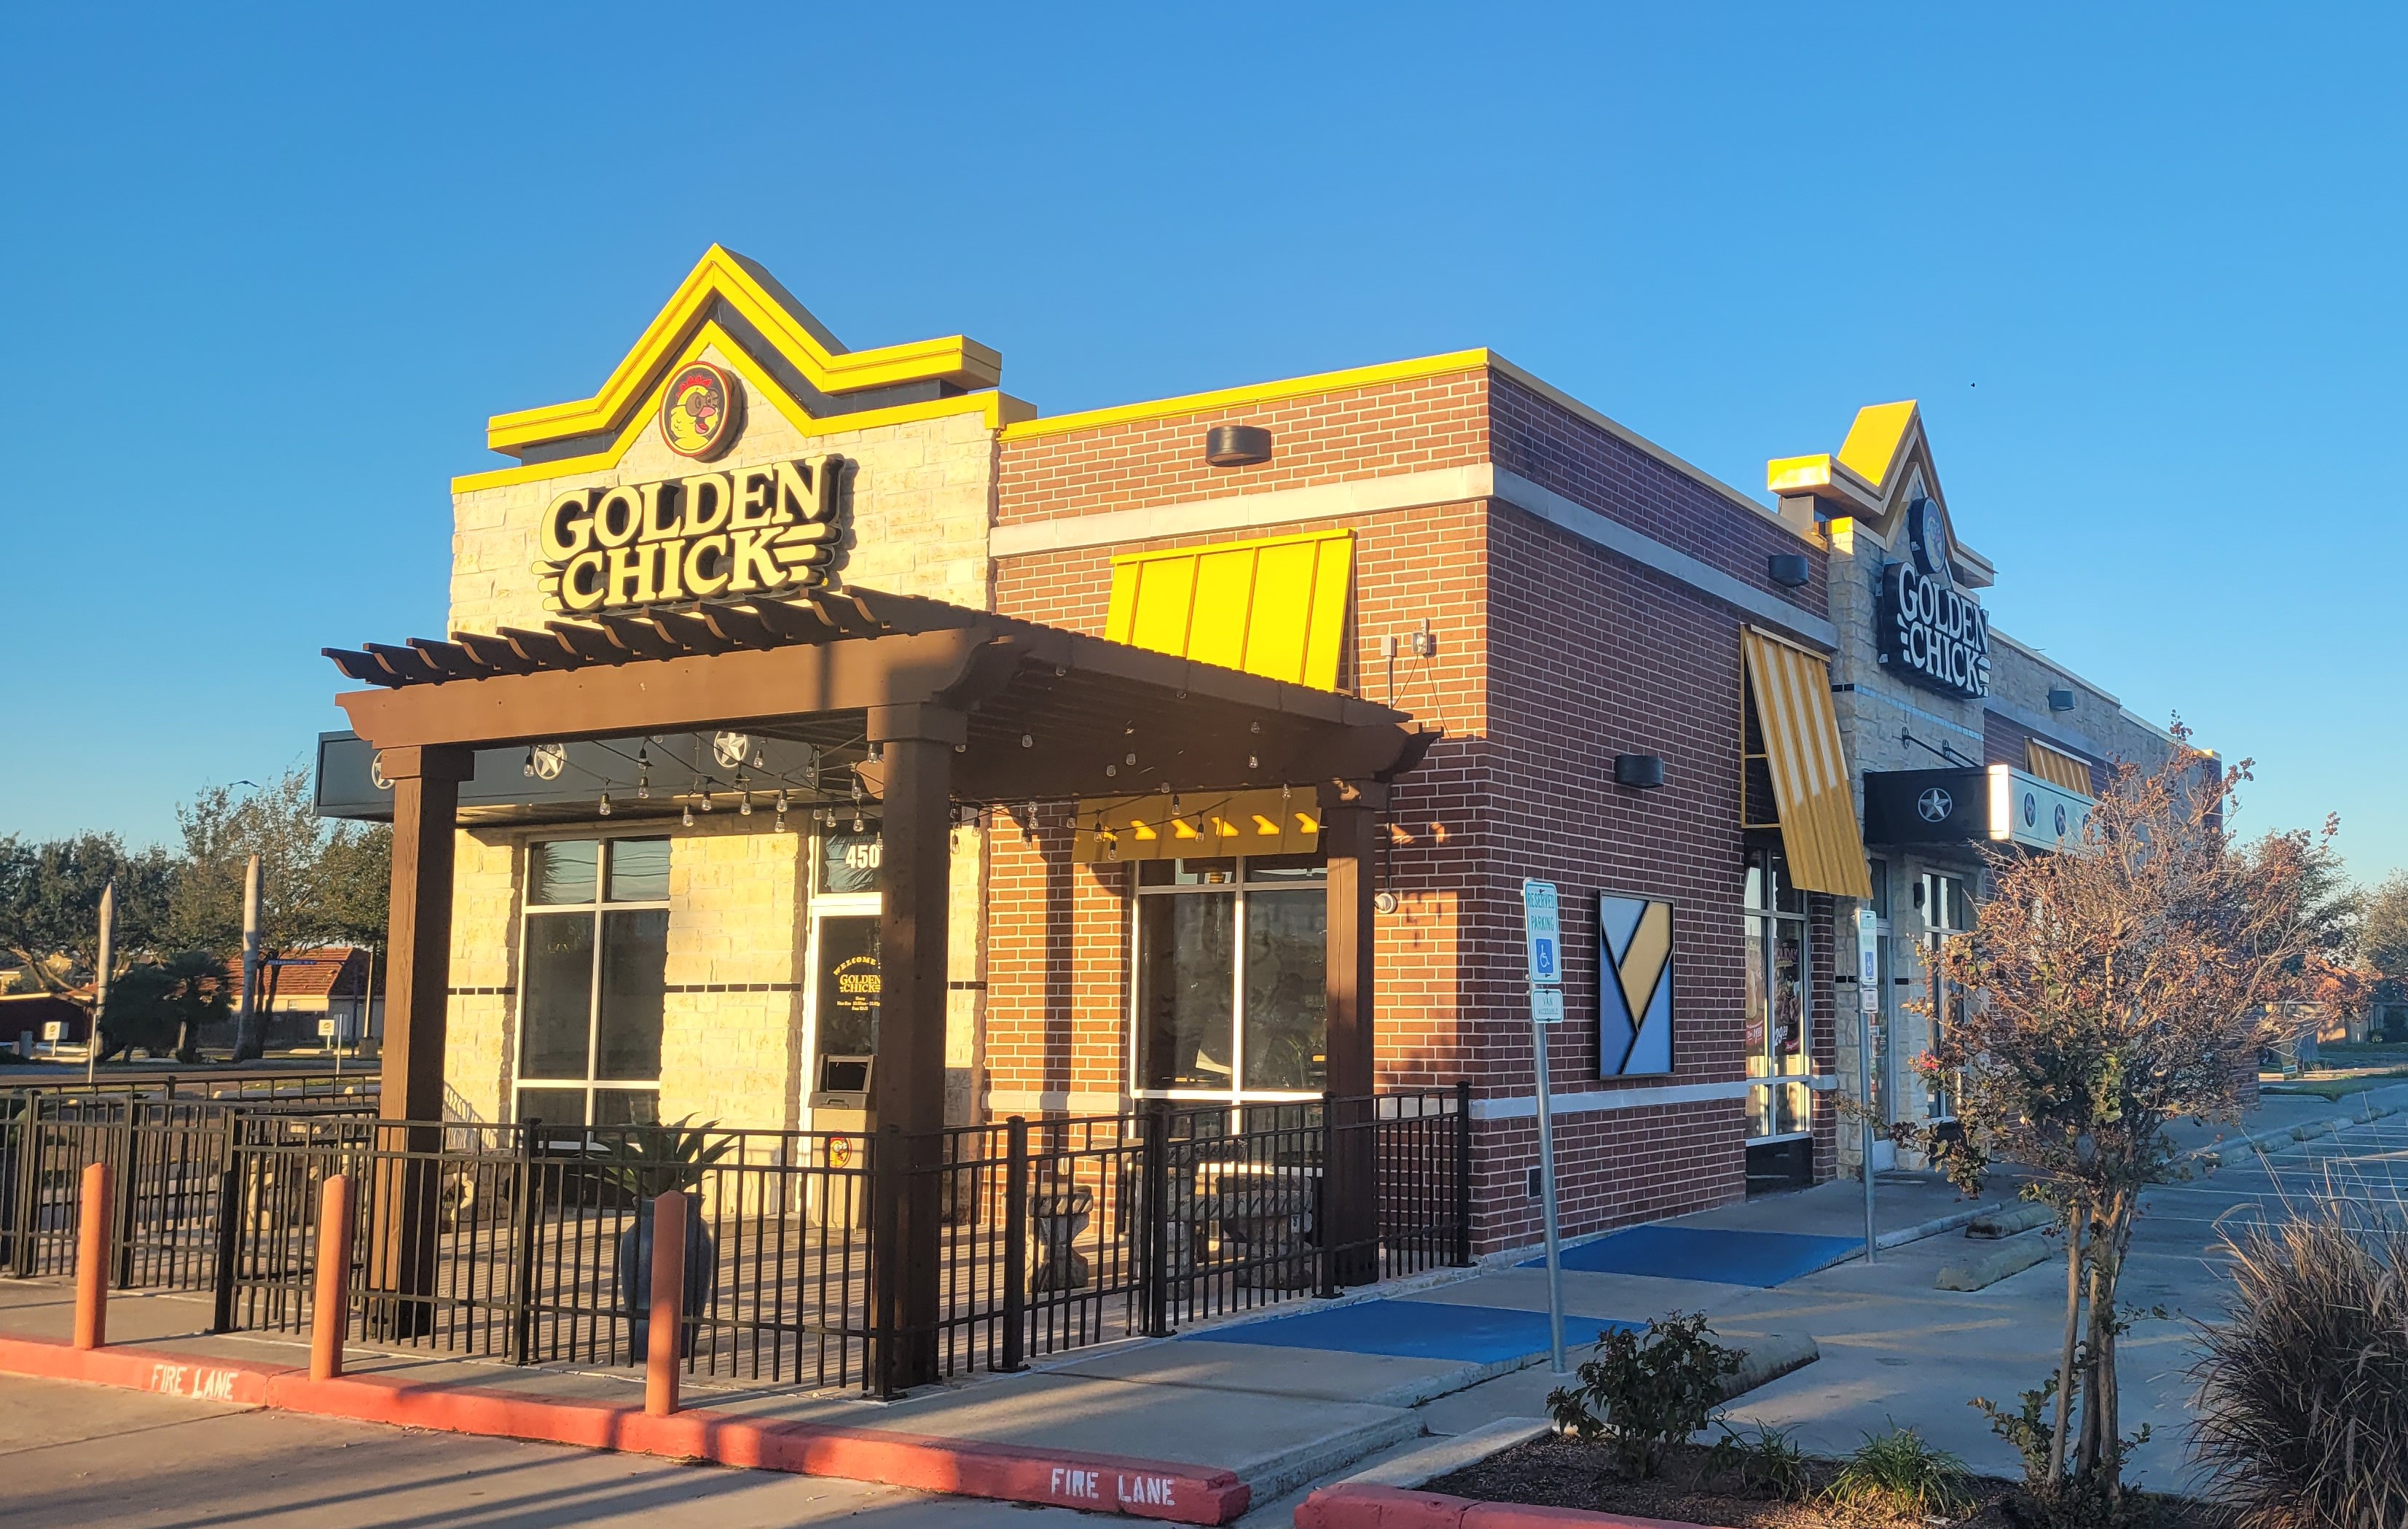 Golden Chick storefront.  Your local Golden Chick fast food restaurant in McAllen, Texas